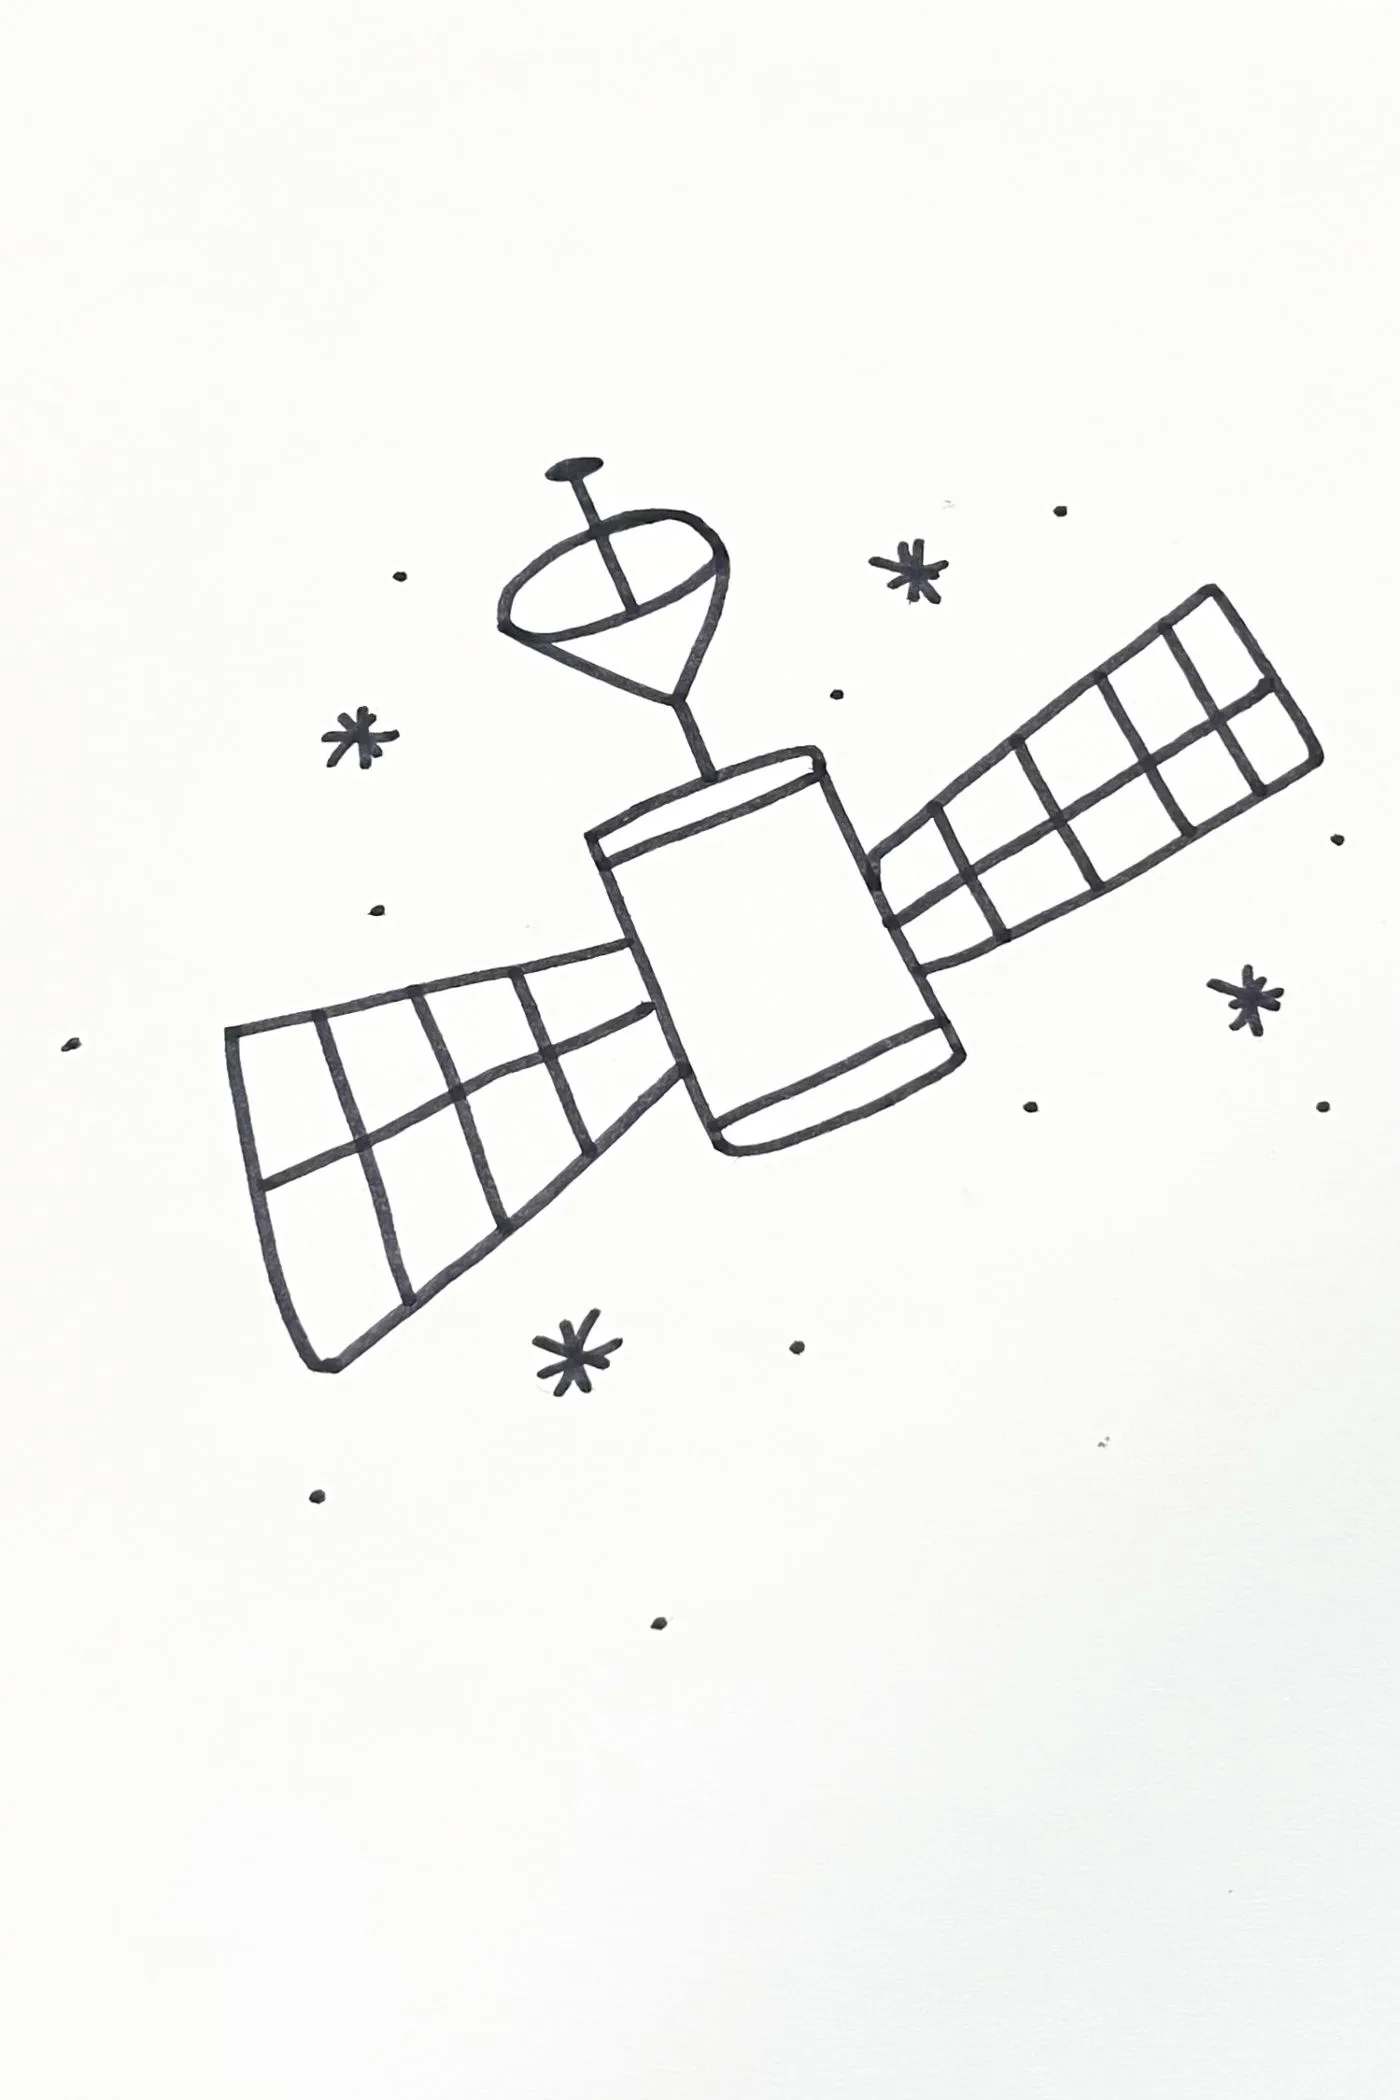 satellite drawing ideas